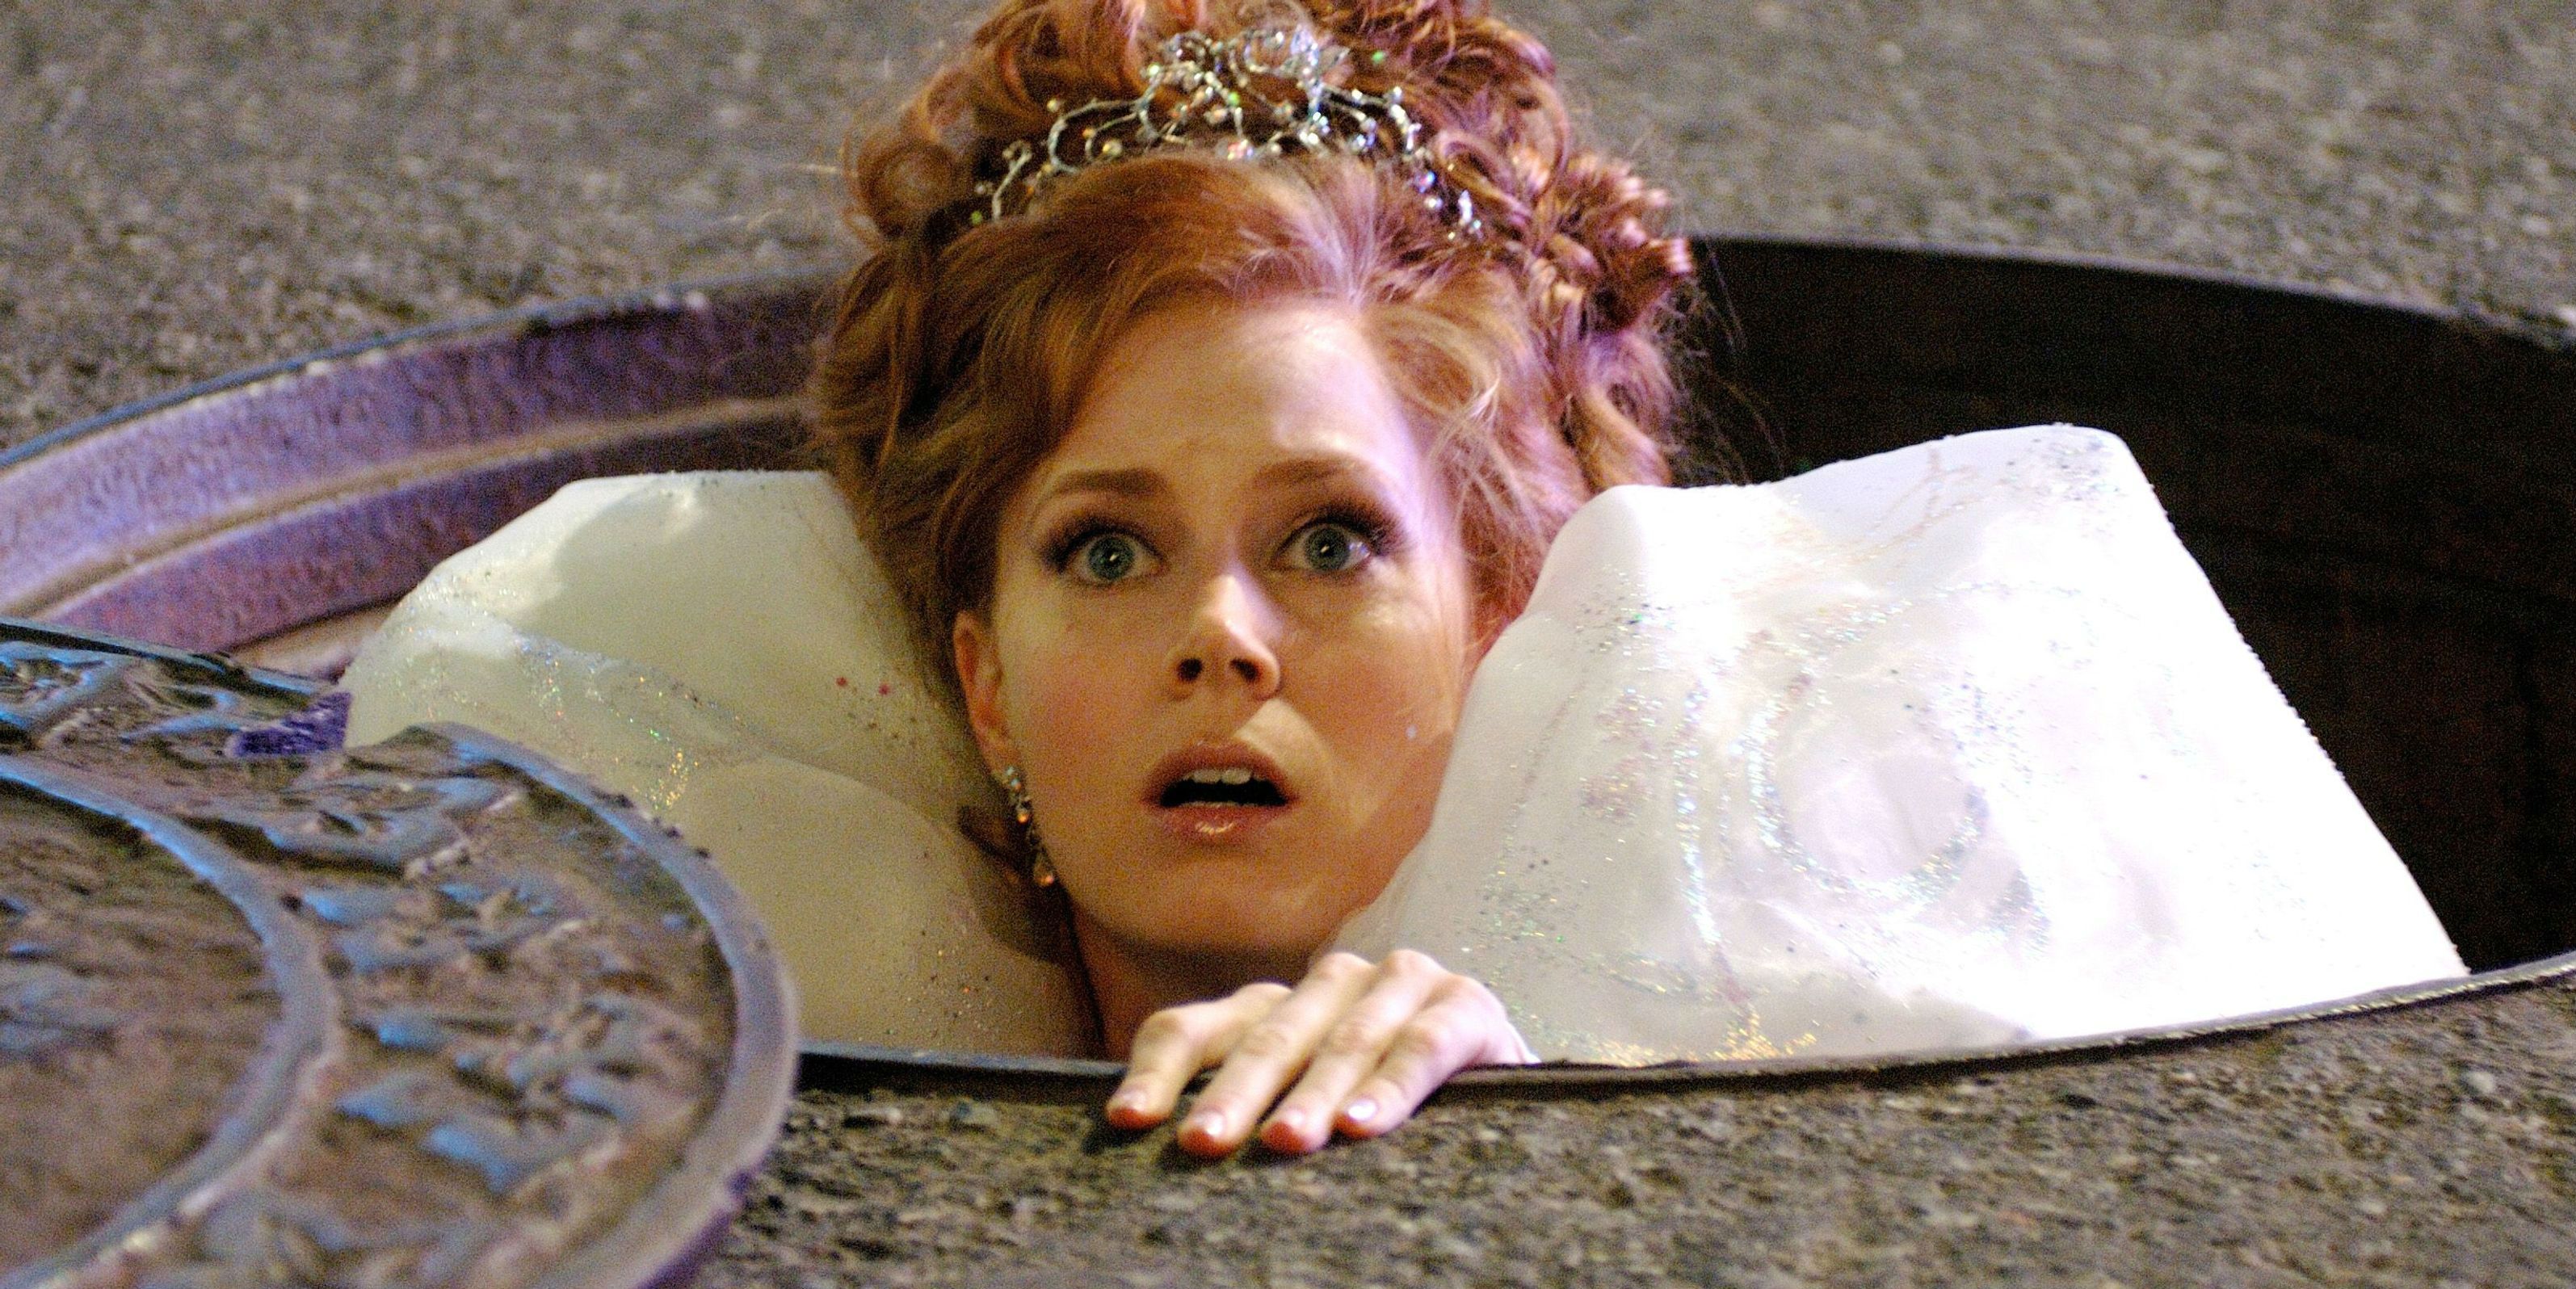 Enchanted - Amy Adams in manhole